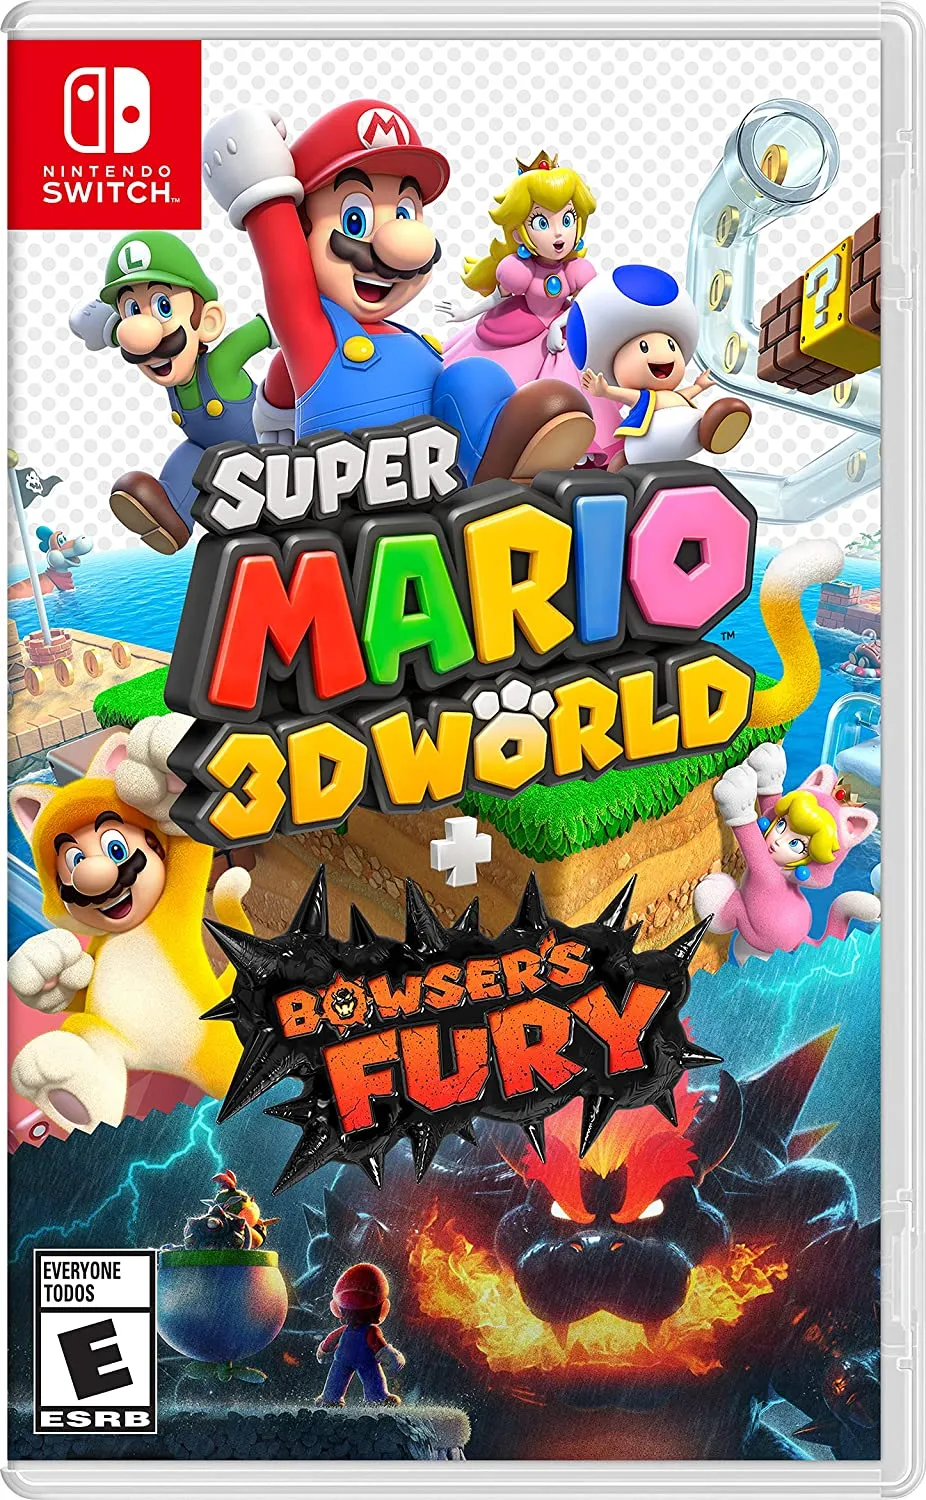 Nintendo Switch용 Super Mario 3D World + Bowser's Fury 커버 아트워크.